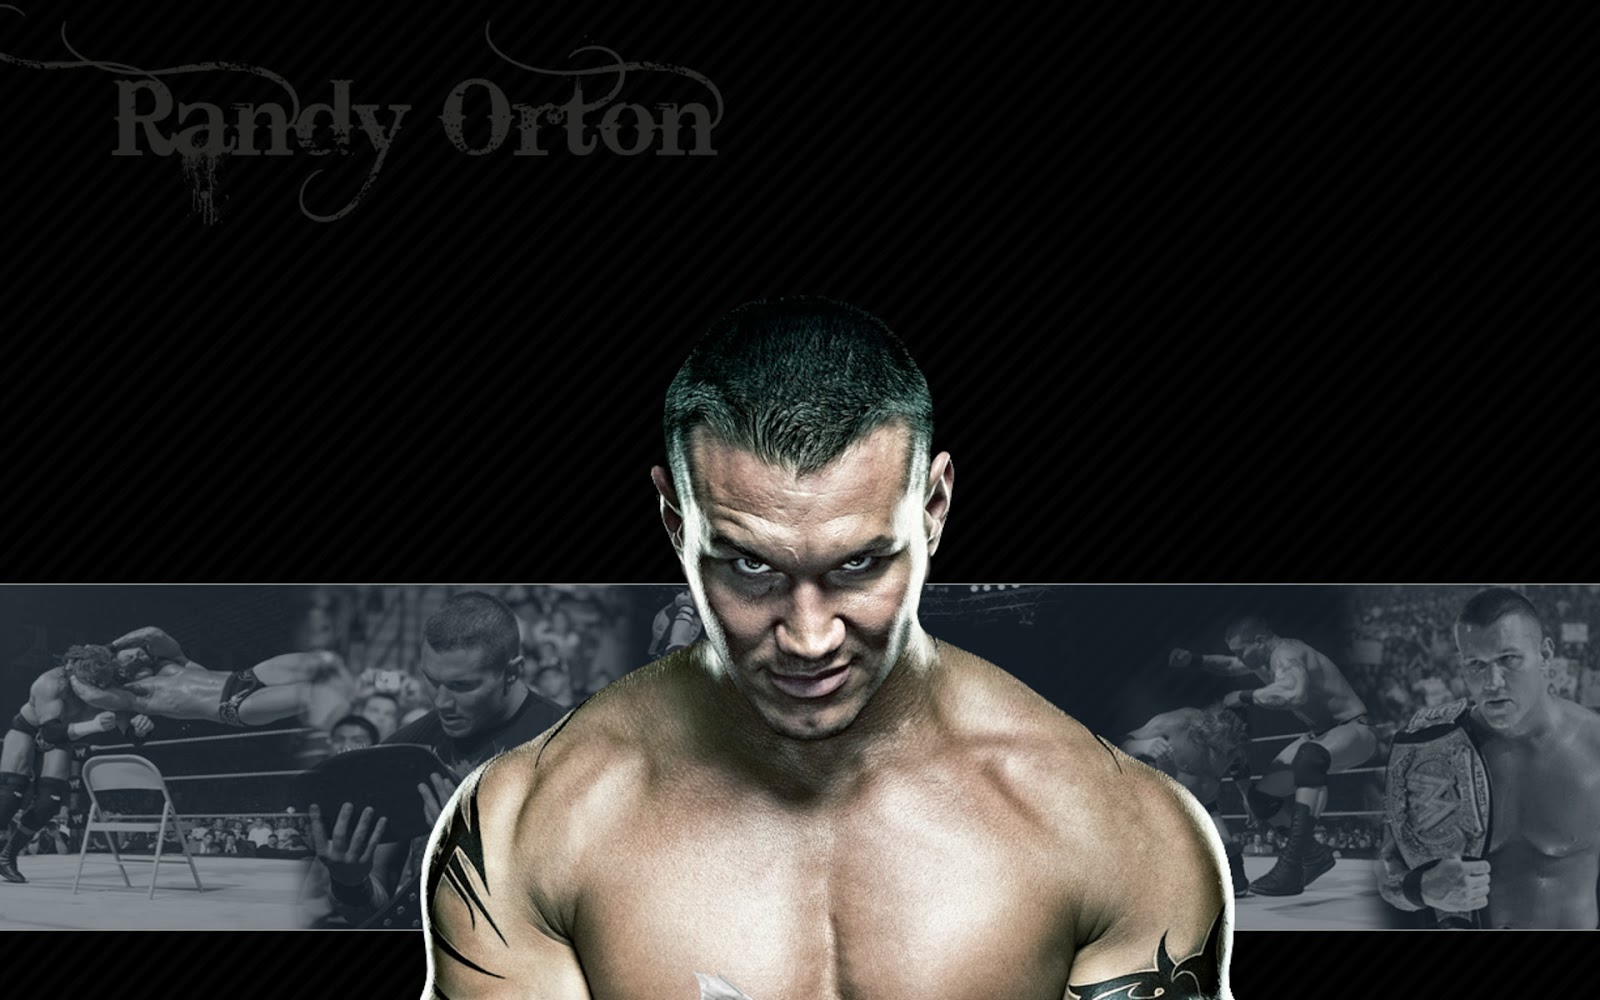 randy orton wallpaper herunterladen,bodybuilder,ohne brust,professionelles wrestling,ringer,bodybuilding